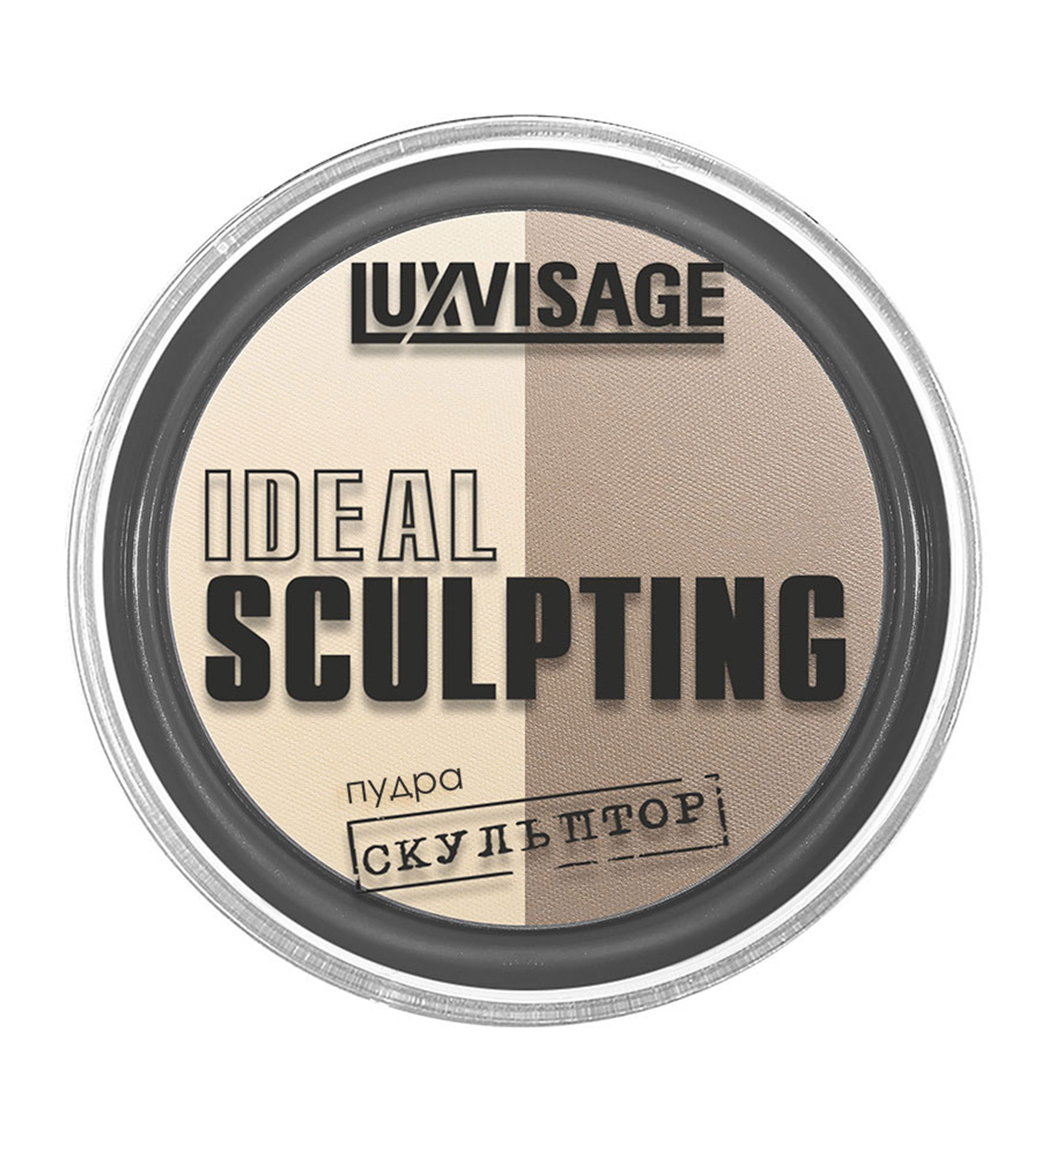 Luxvisage Пудра-скульптор Ideal Sculpting, 9 г (Luxvisage, Лицо) пудра скульптор luxvisage 9 г 01 тон